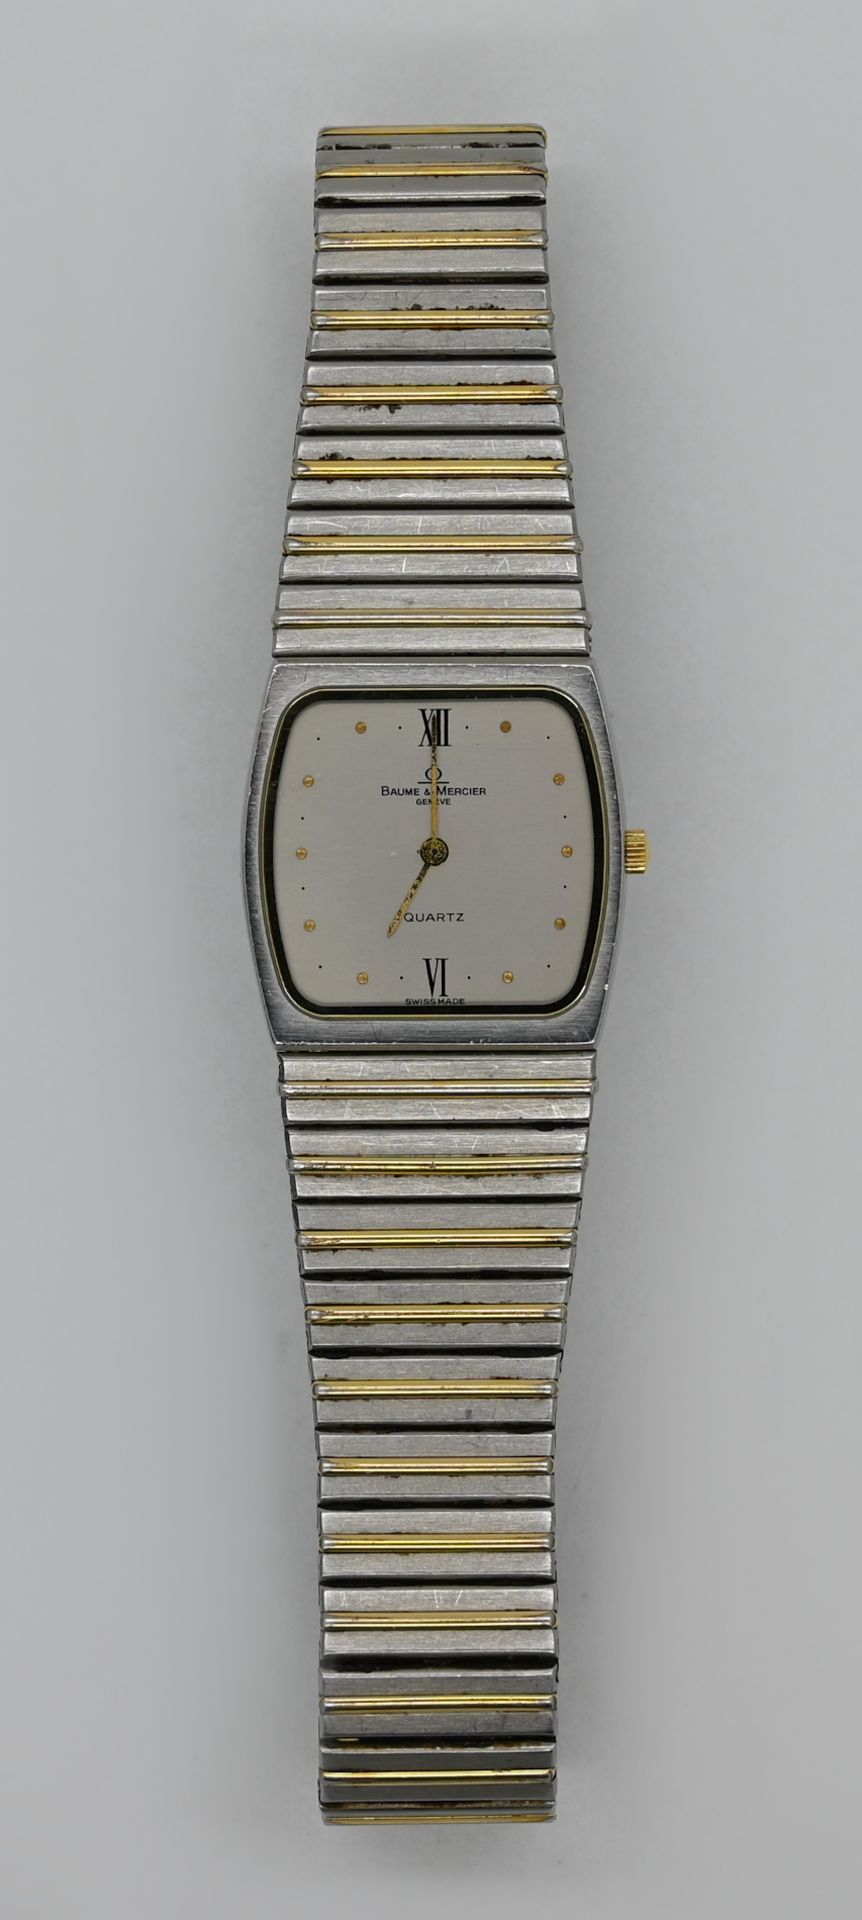 1 Armbanduhr BAUME & MERCIER Quartz., Stahl, wohl z.T. vergoldet mit 2 Ersatzgliedern Tsp.